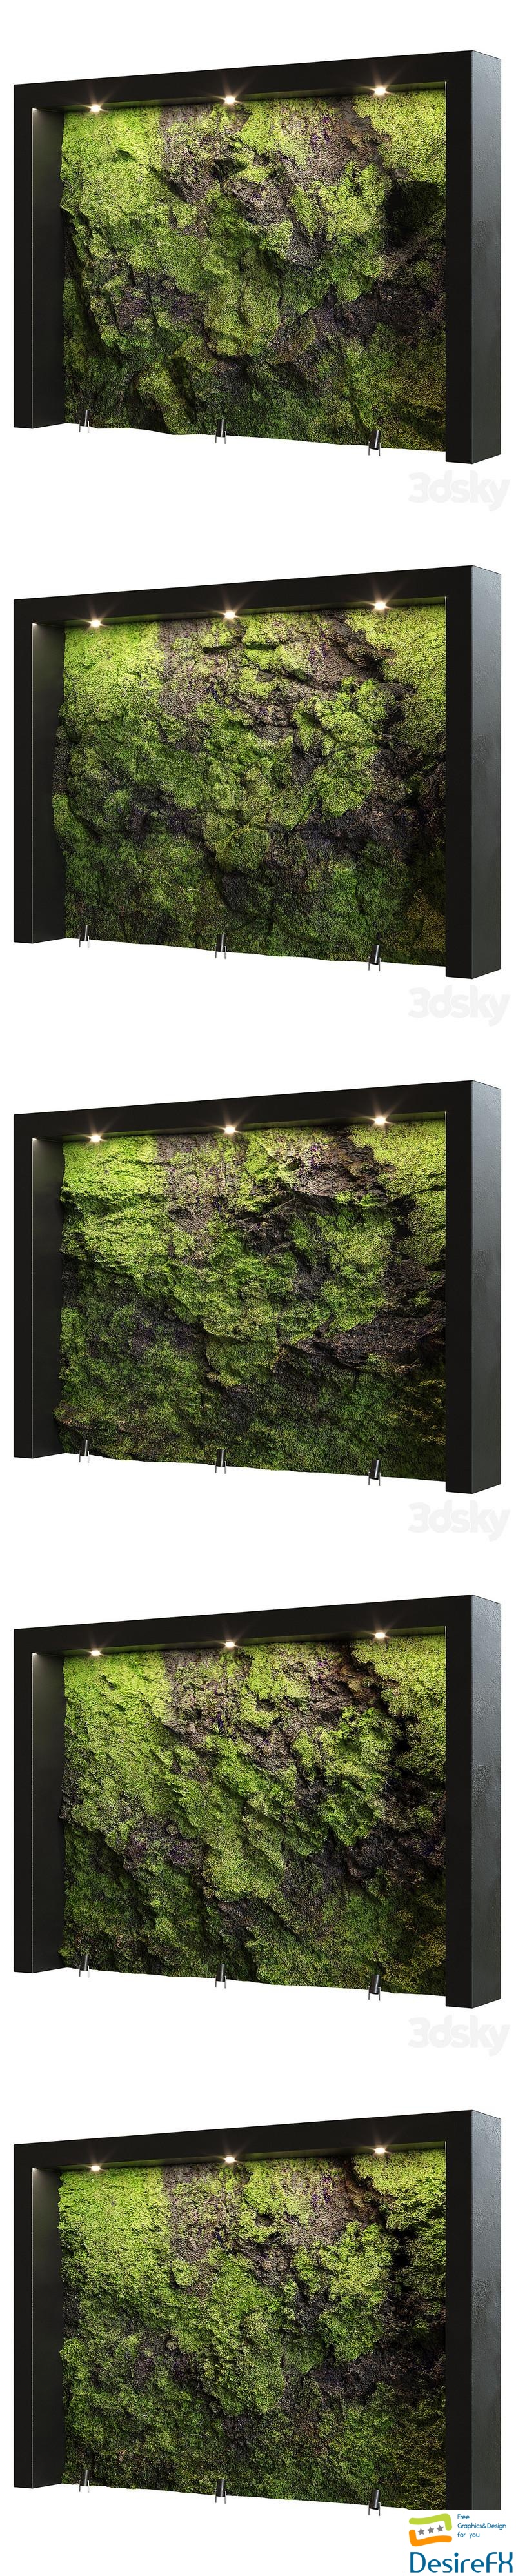 Green natural stone wall1 3D Model